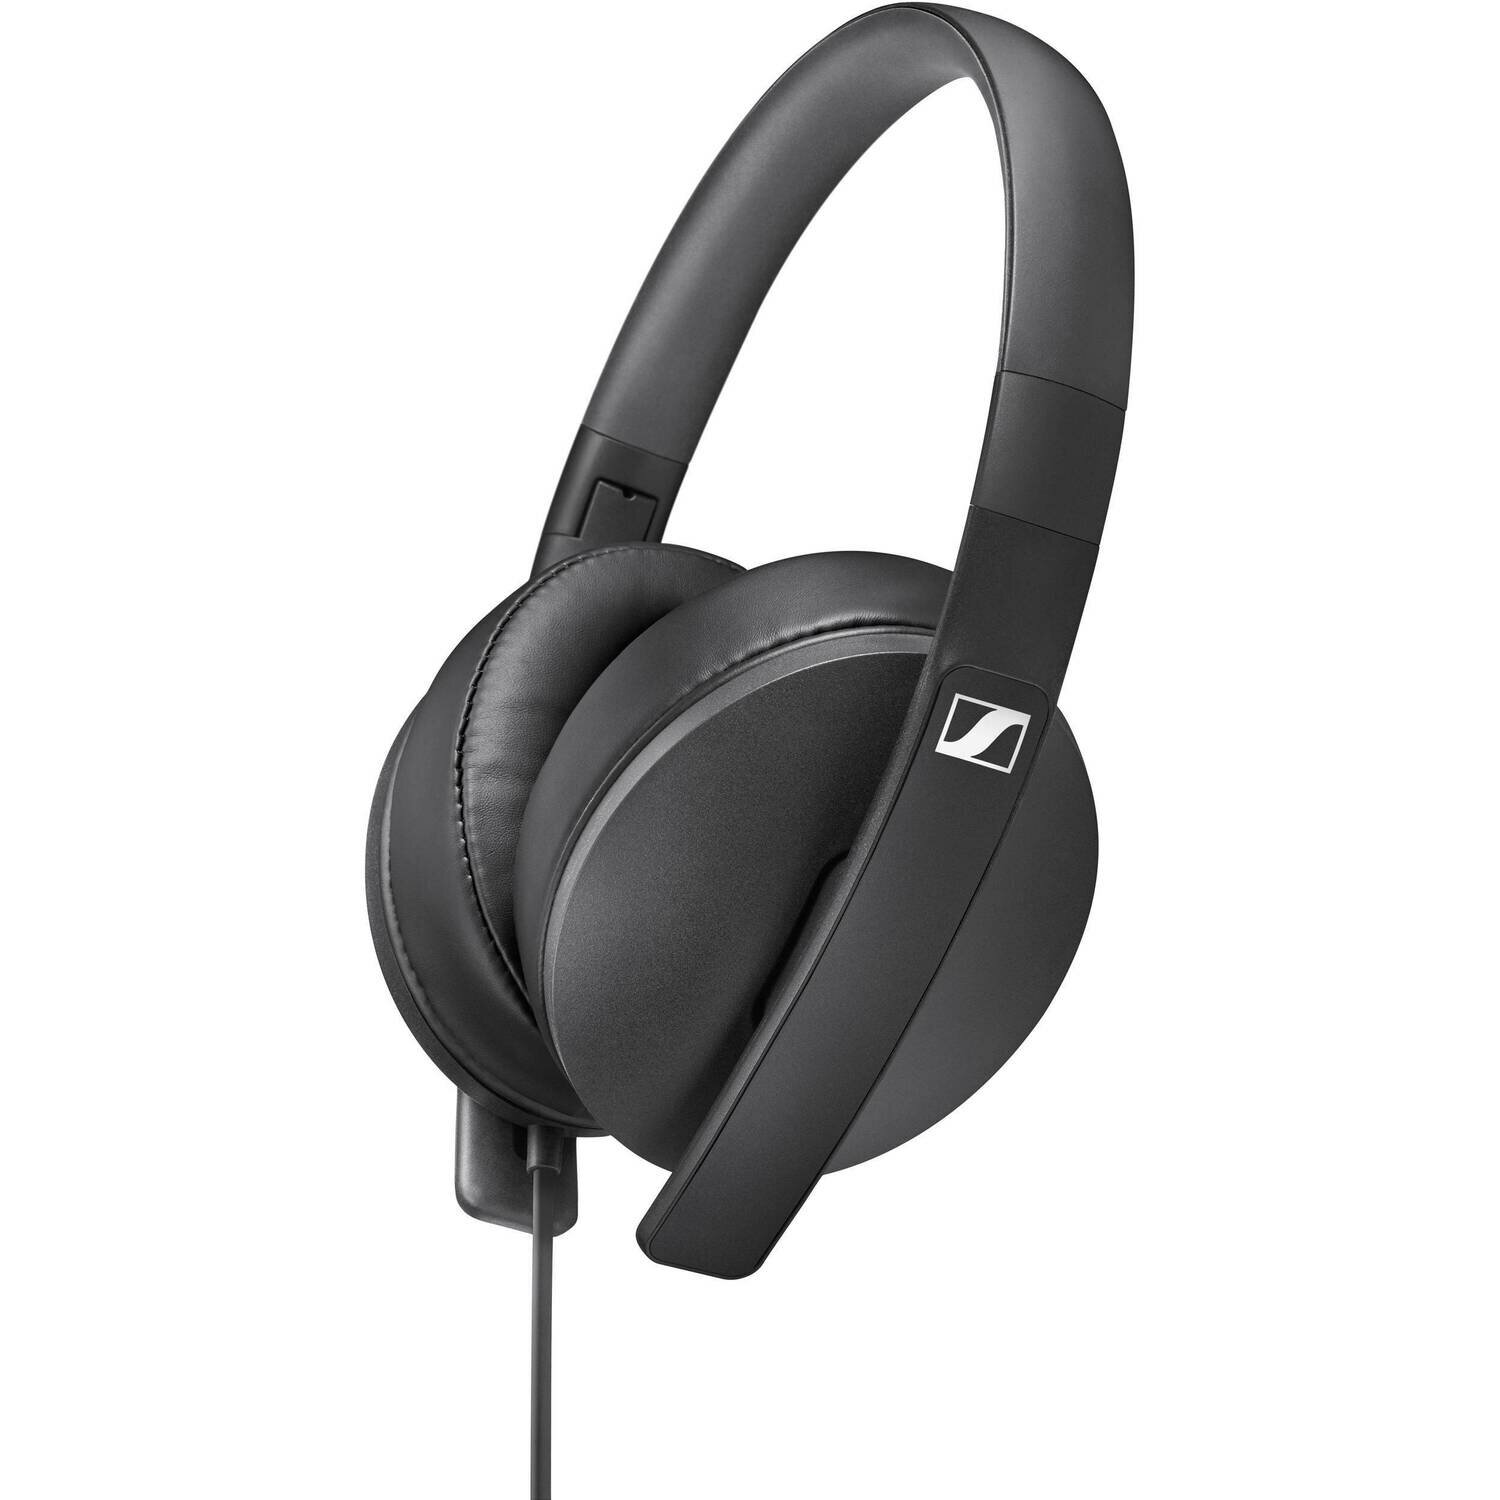 Sennheiser HD 300 Over-Ear Headphones
#SEHD300 MFR #508597